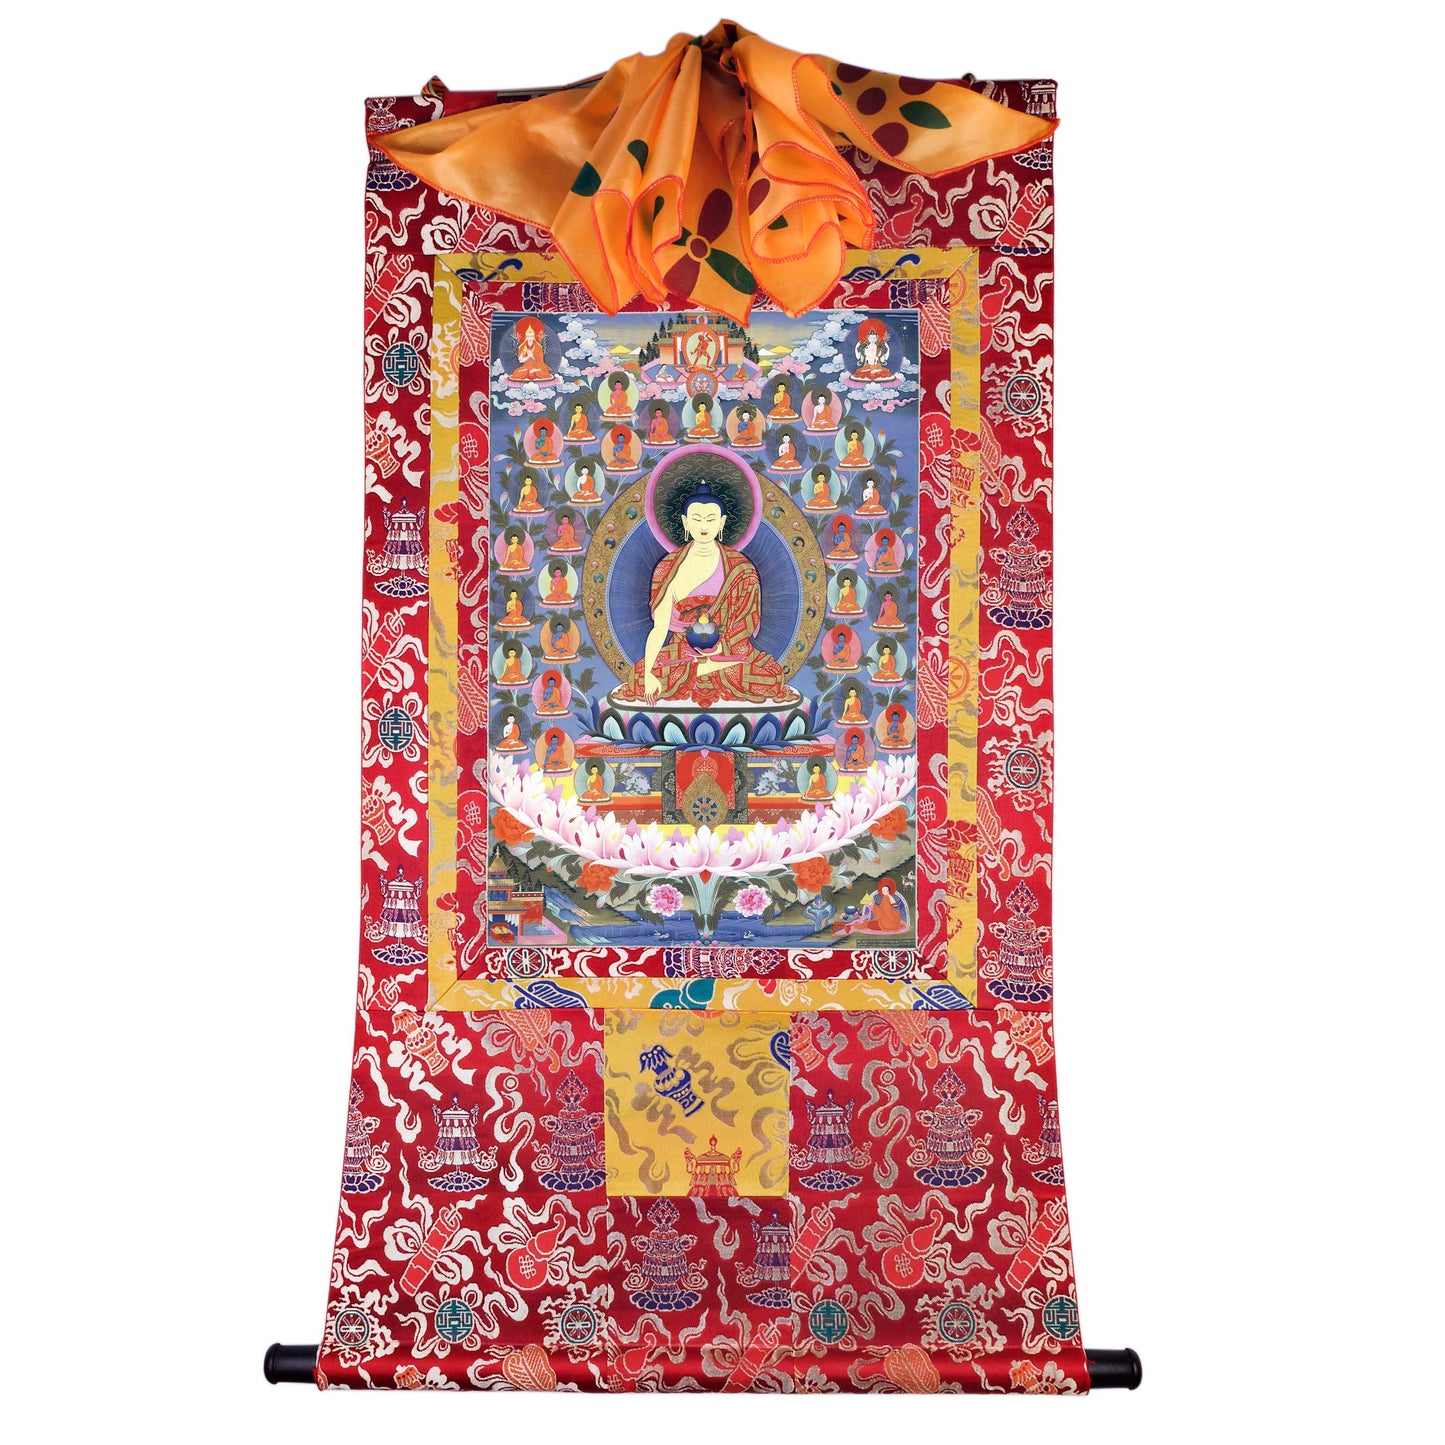 Gandhanra Tibetan Thangka Art - 35 Confession Buddhas - from Kathok Monastery - Giclee Print with Mineral Pigments